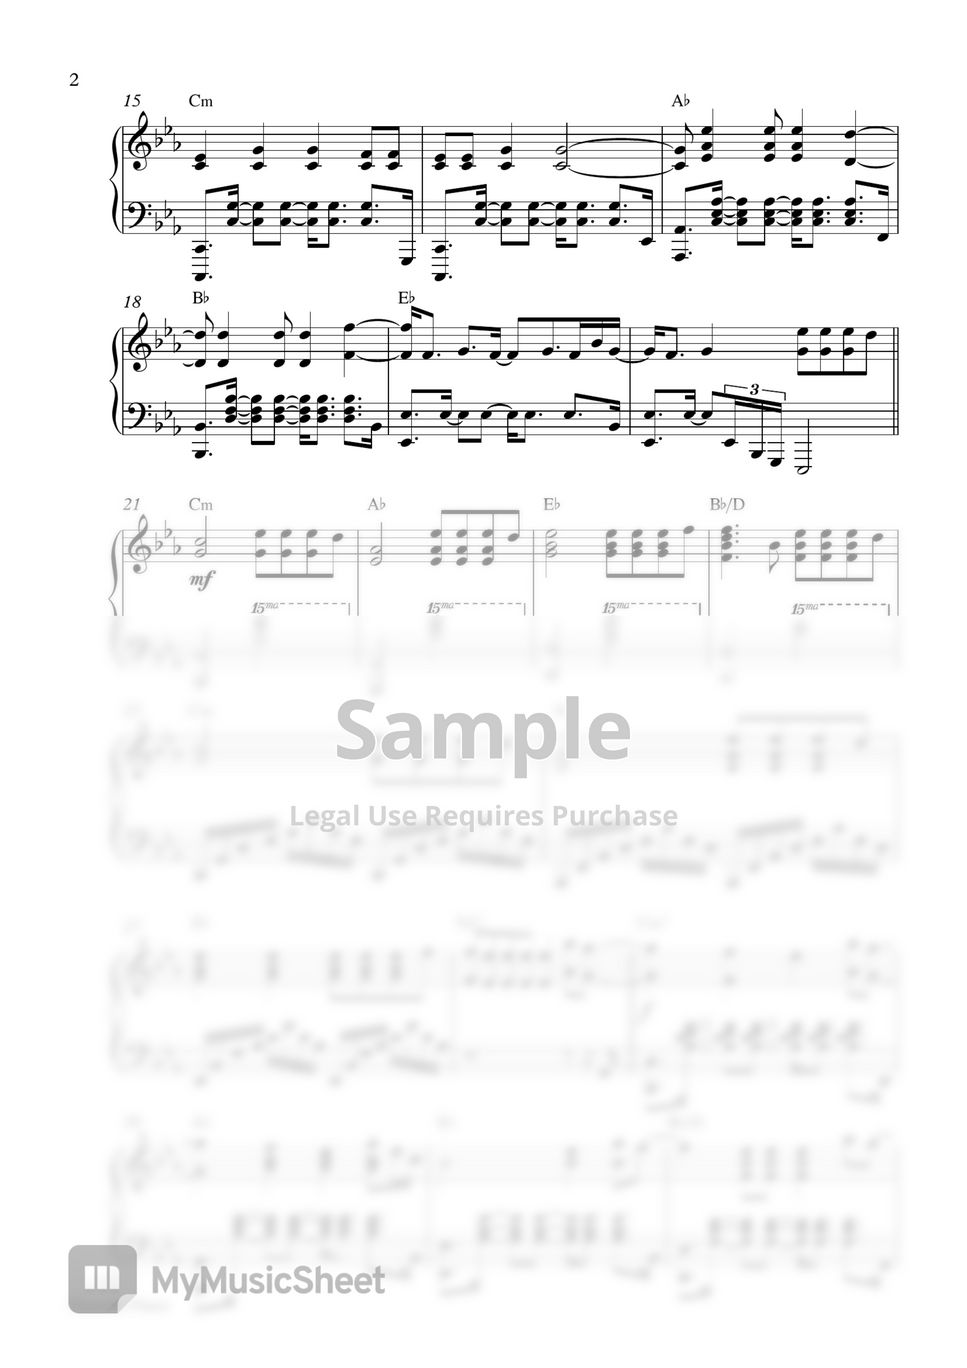 Imagine Dragons - Bad Liar (Piano Sheet) by Pianella Piano